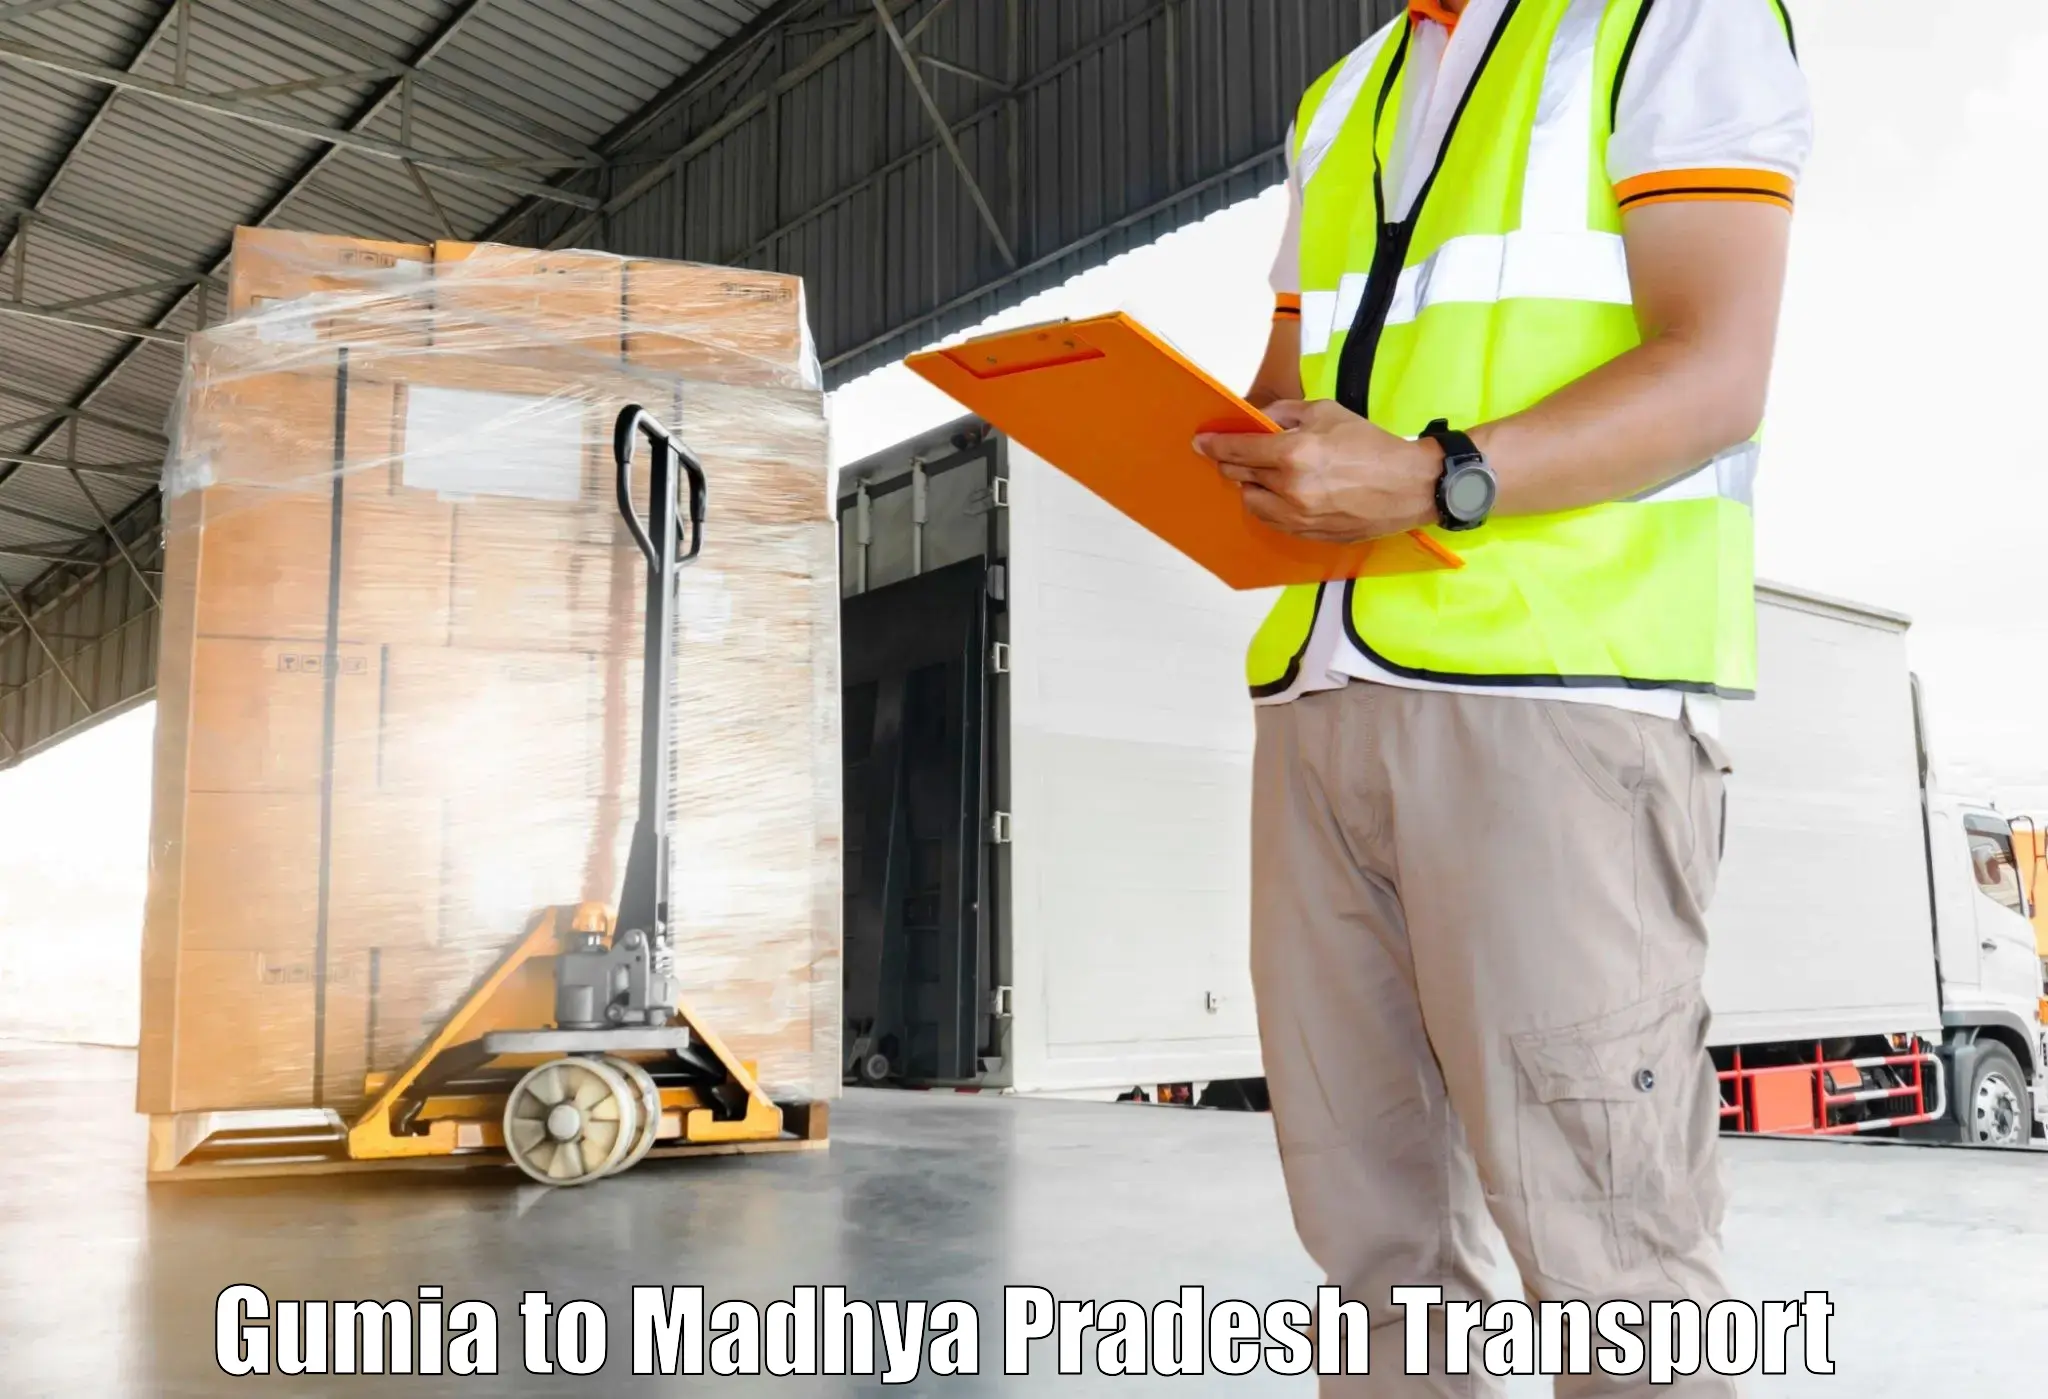 Delivery service Gumia to Barwani